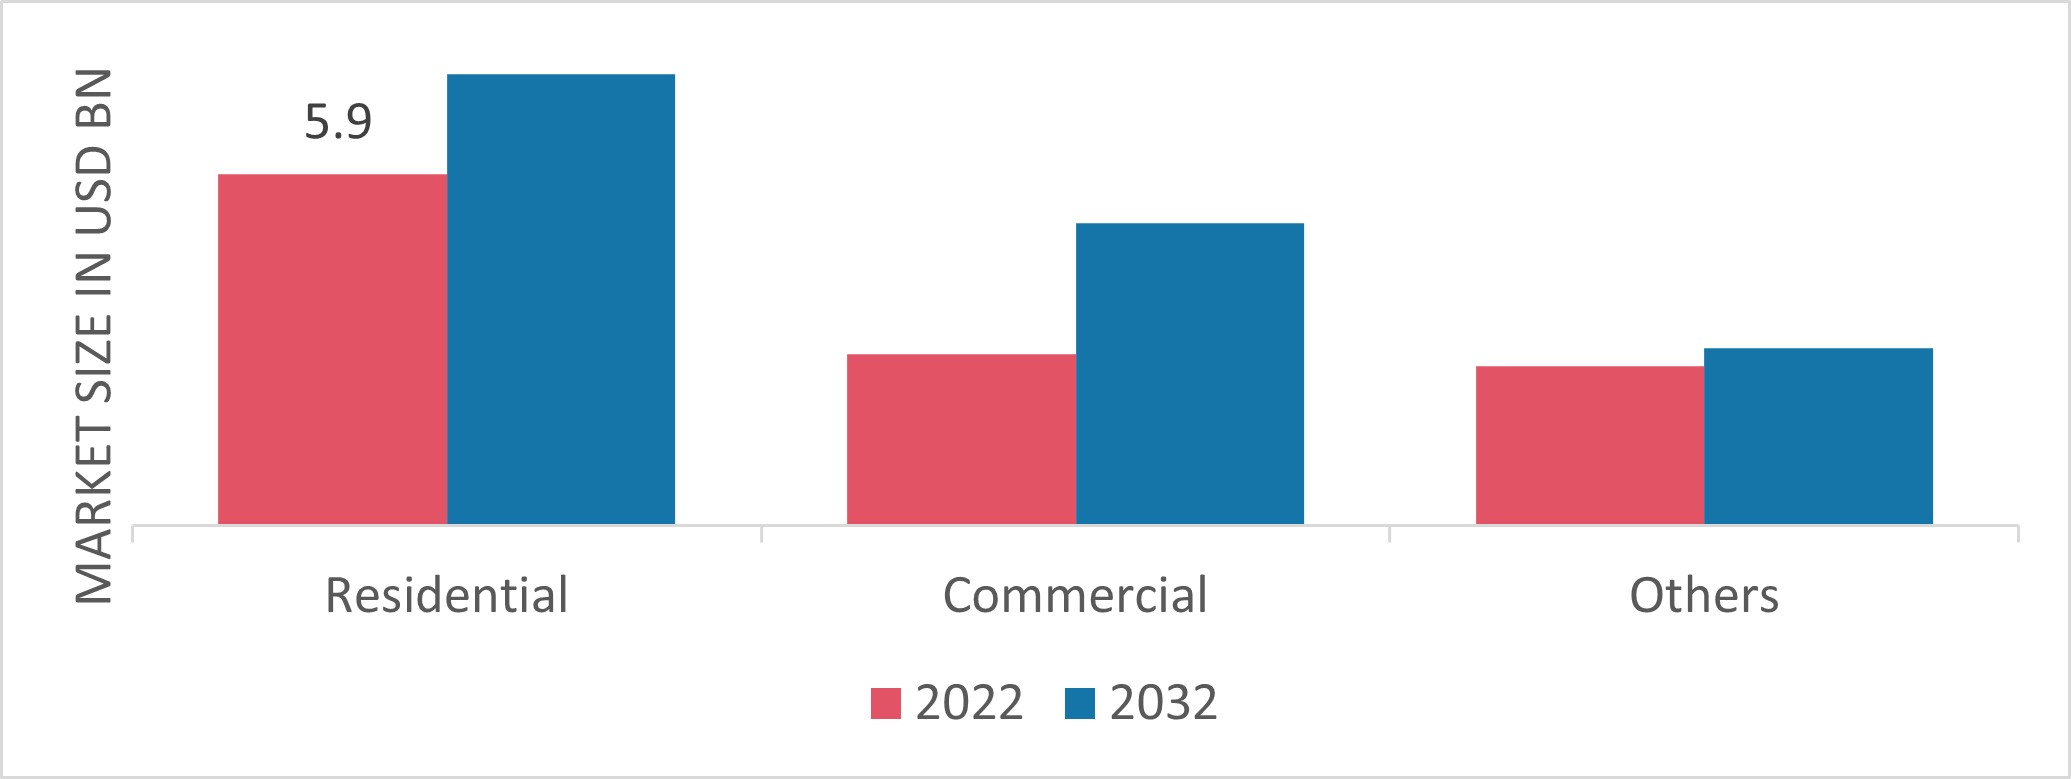 Decorative High-Pressure Laminates Market, by End Use, 2022 & 2032